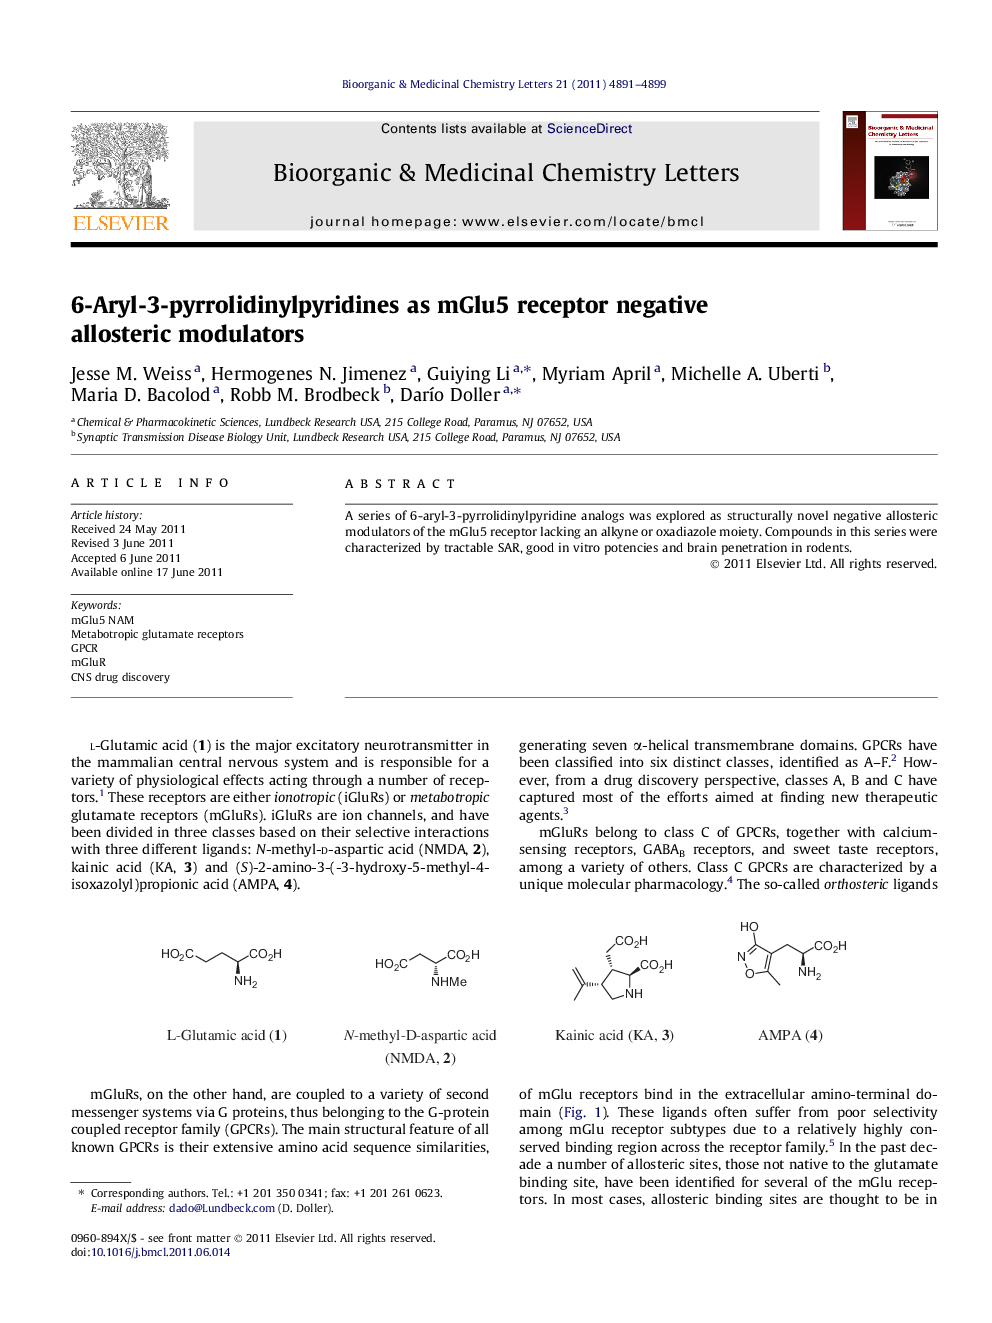 6-Aryl-3-pyrrolidinylpyridines as mGlu5 receptor negative allosteric modulators